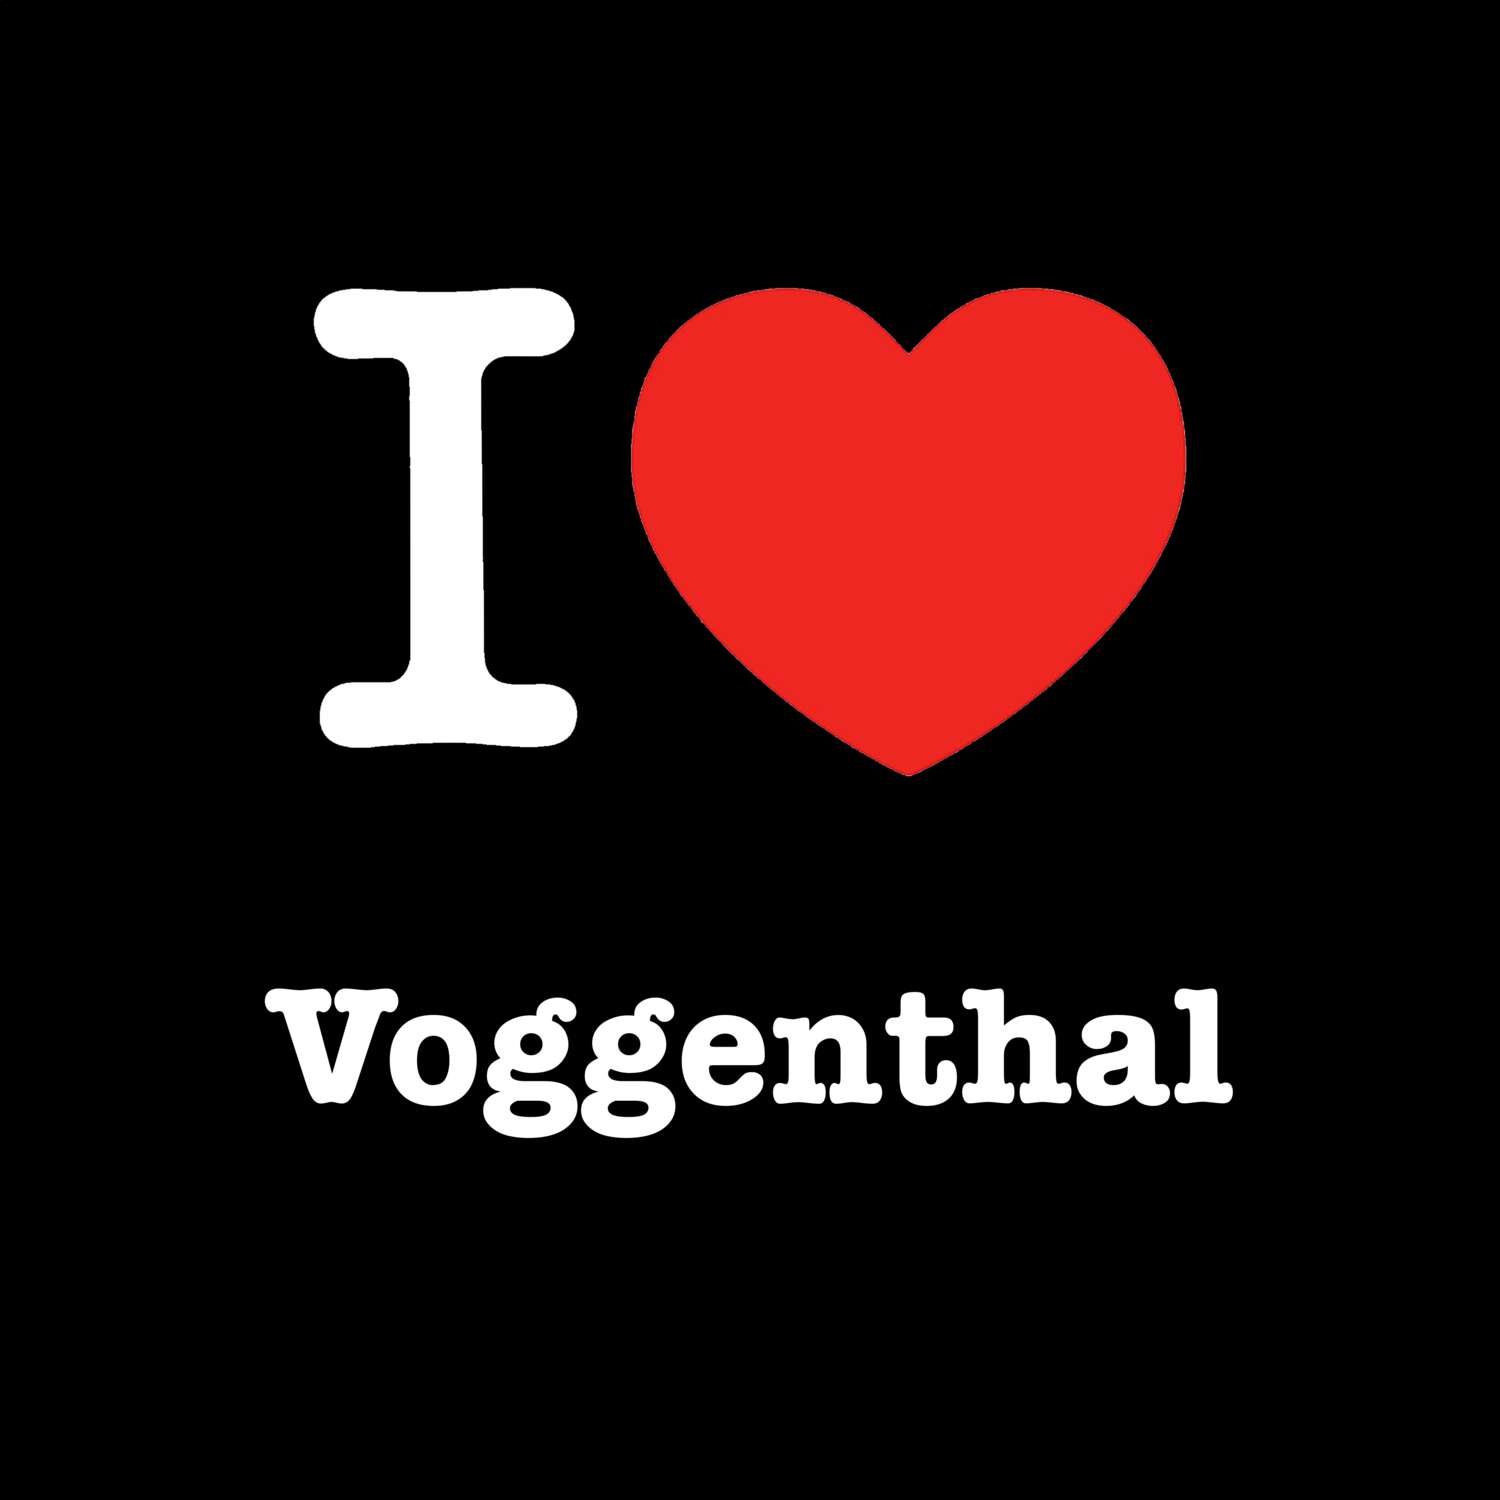 Voggenthal T-Shirt »I love«